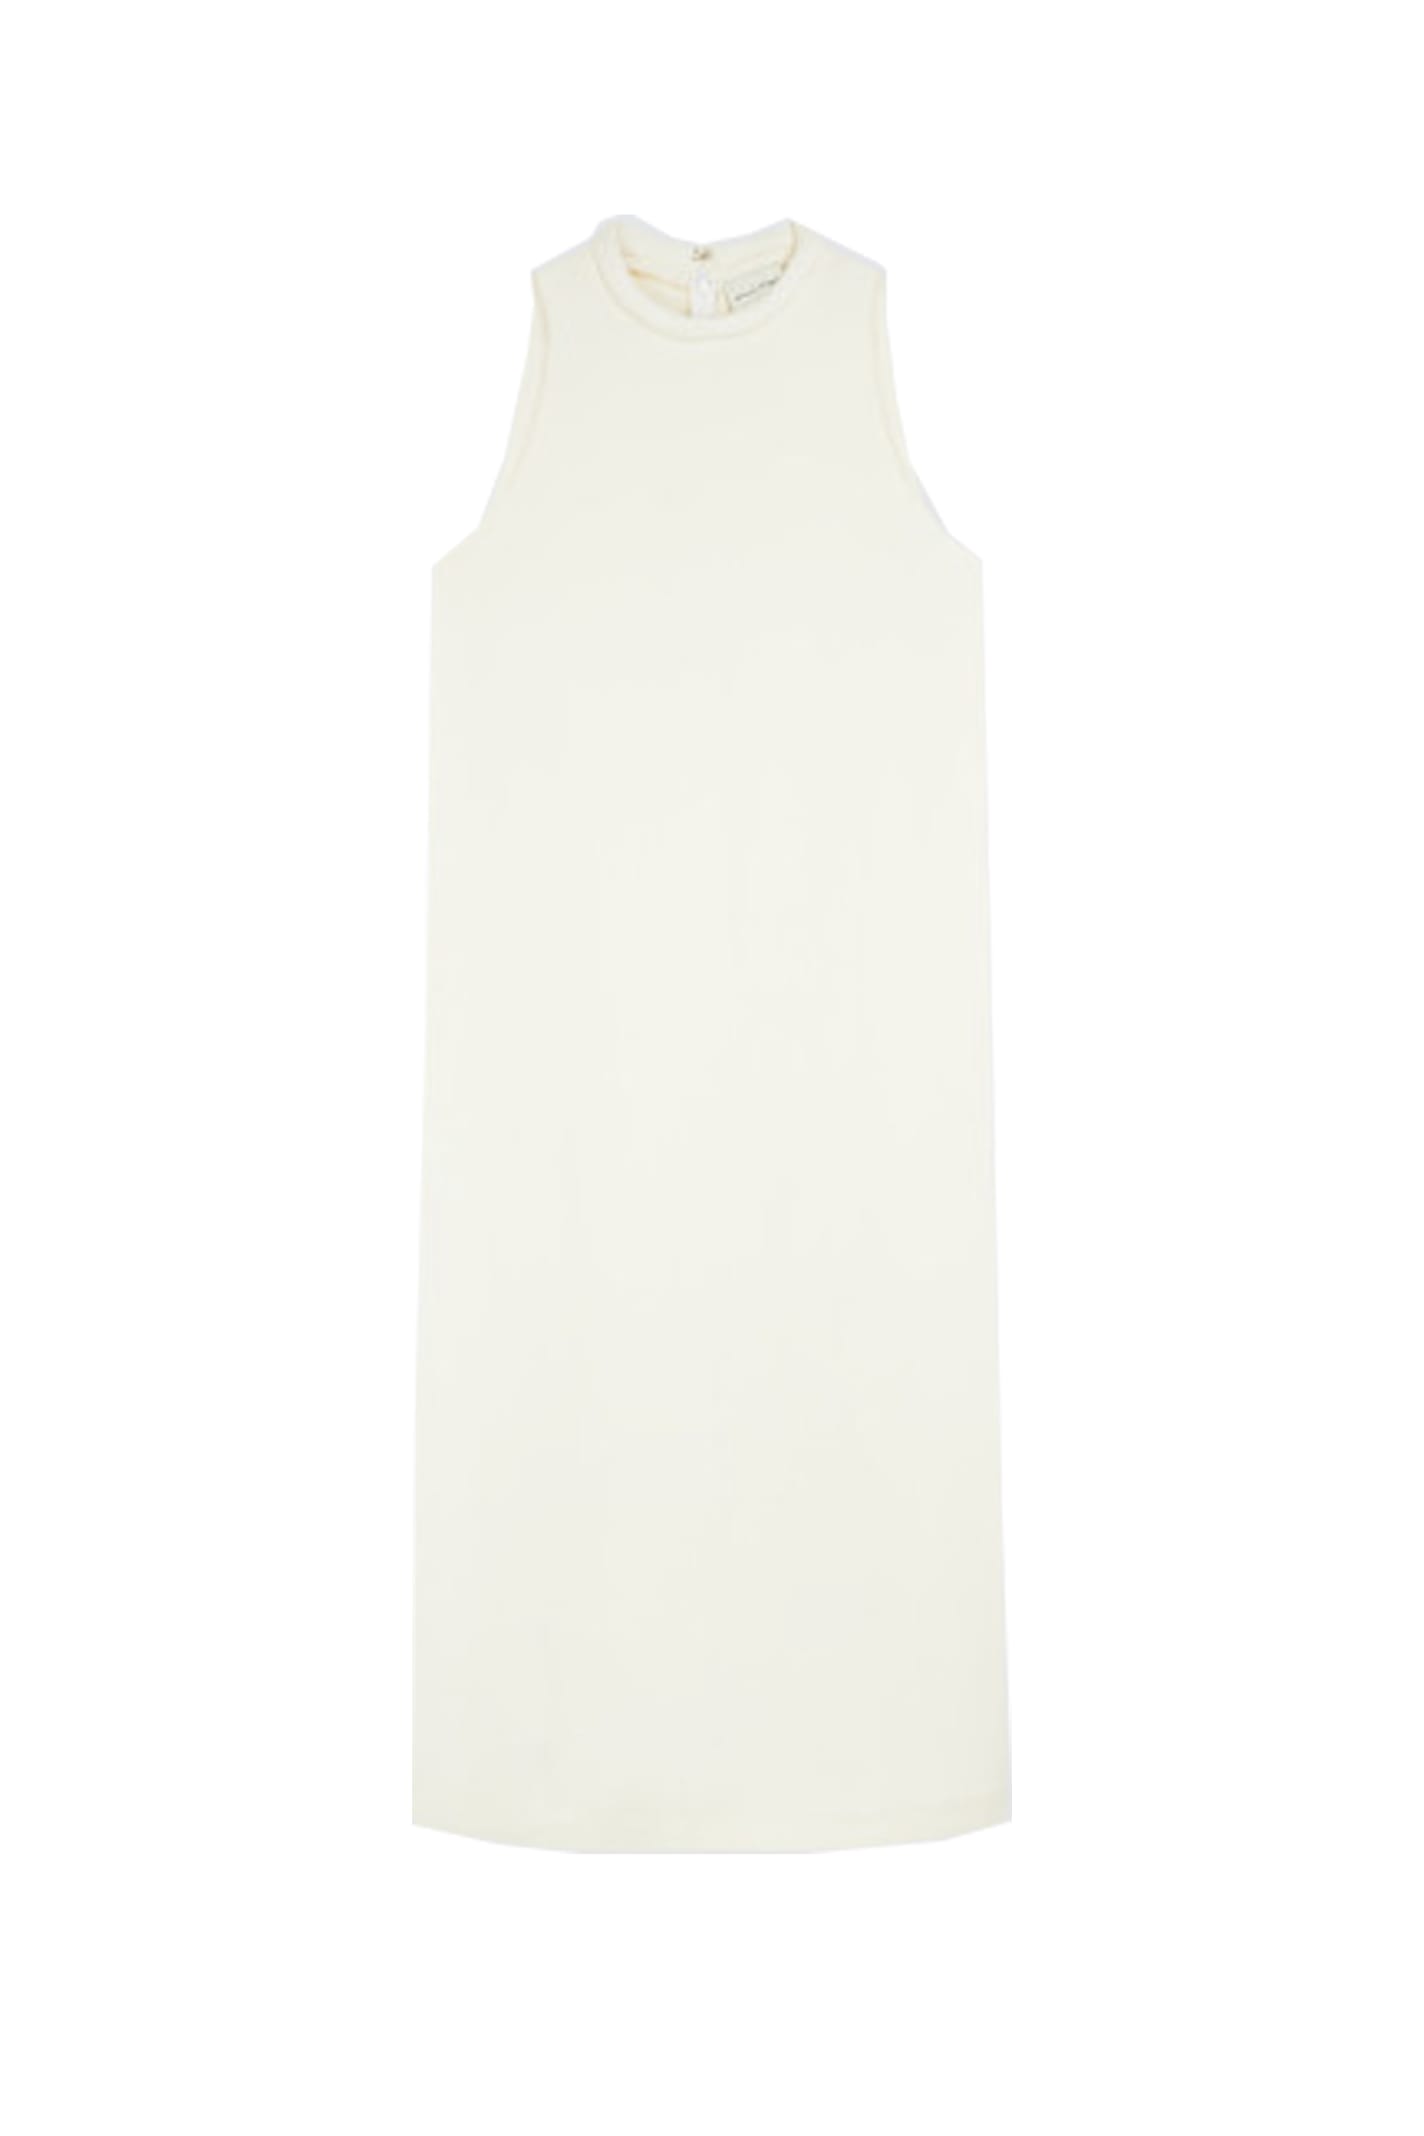 Loulou Studio Rivida Dress In Ivory